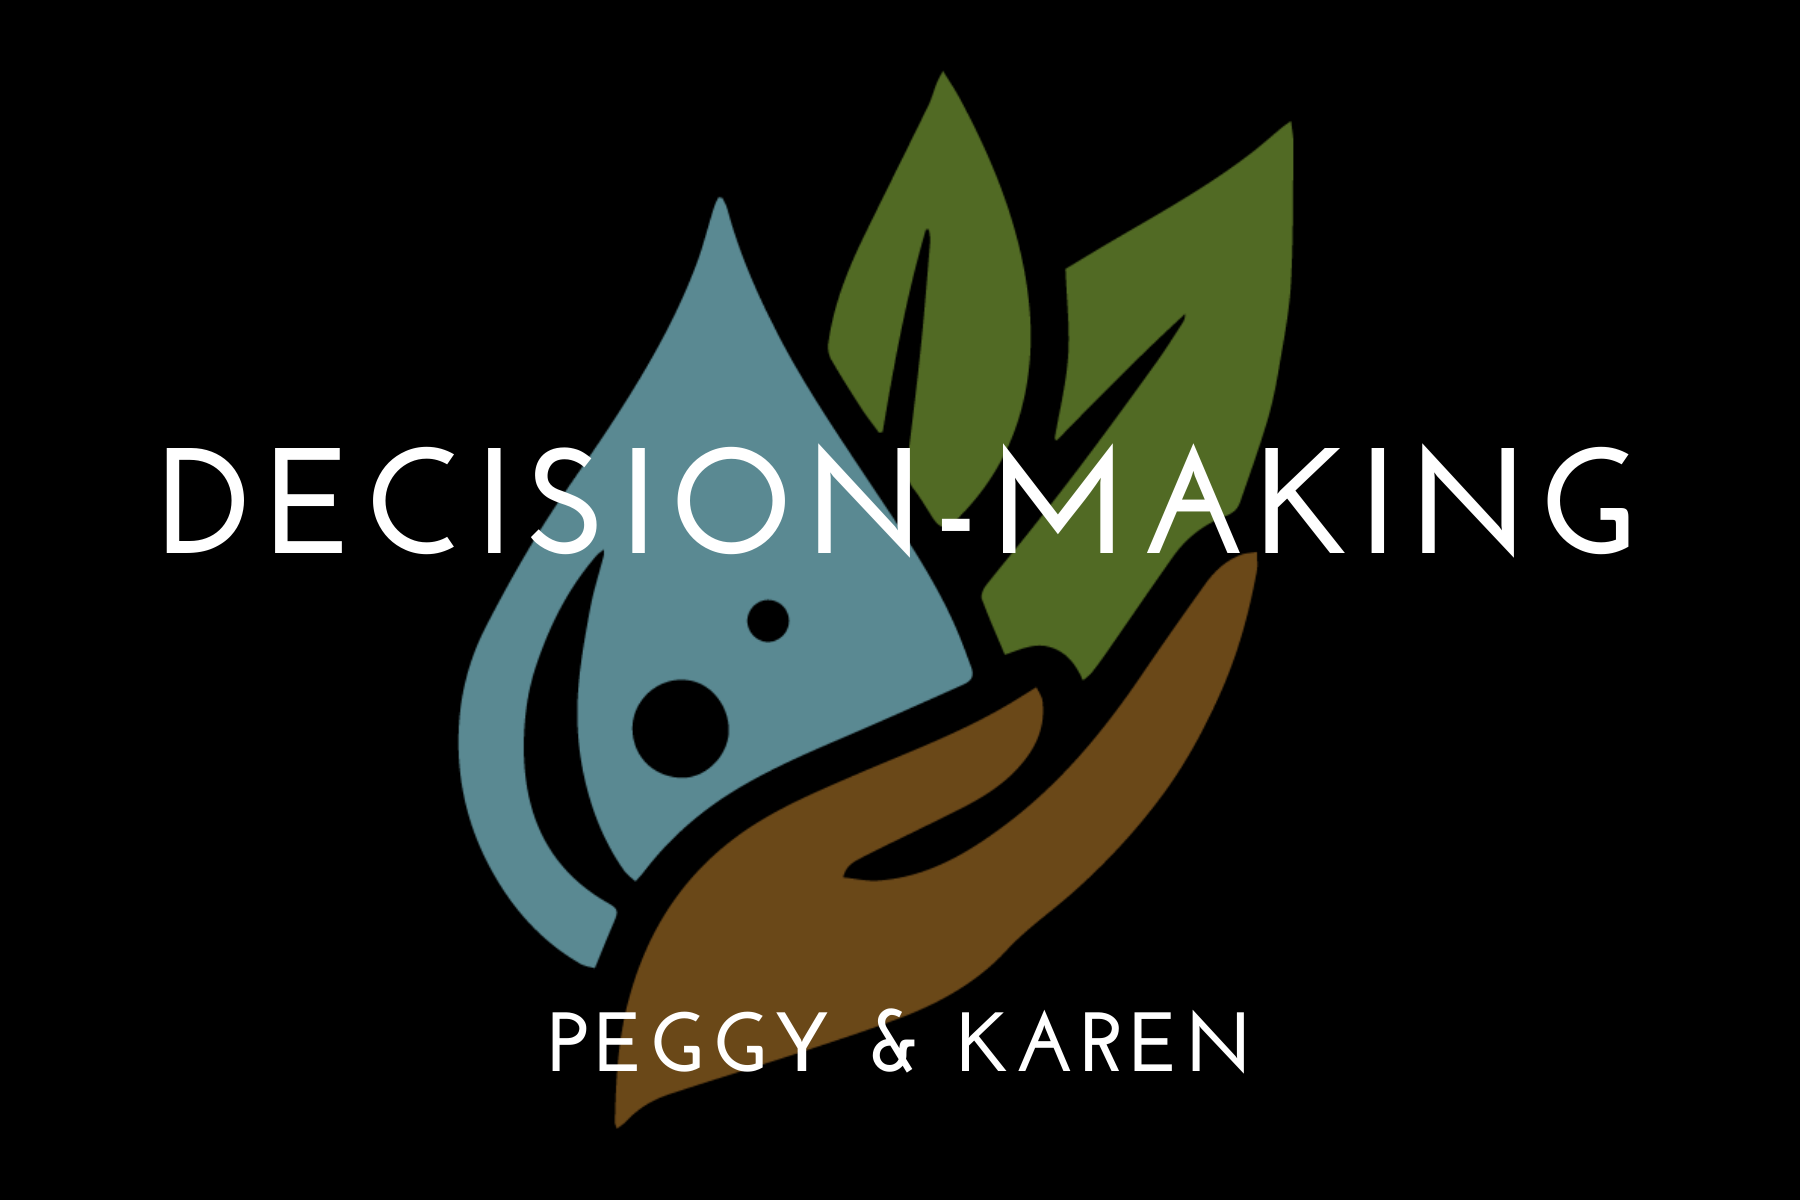 PEGGY-_-KAREN-DECISION_.png